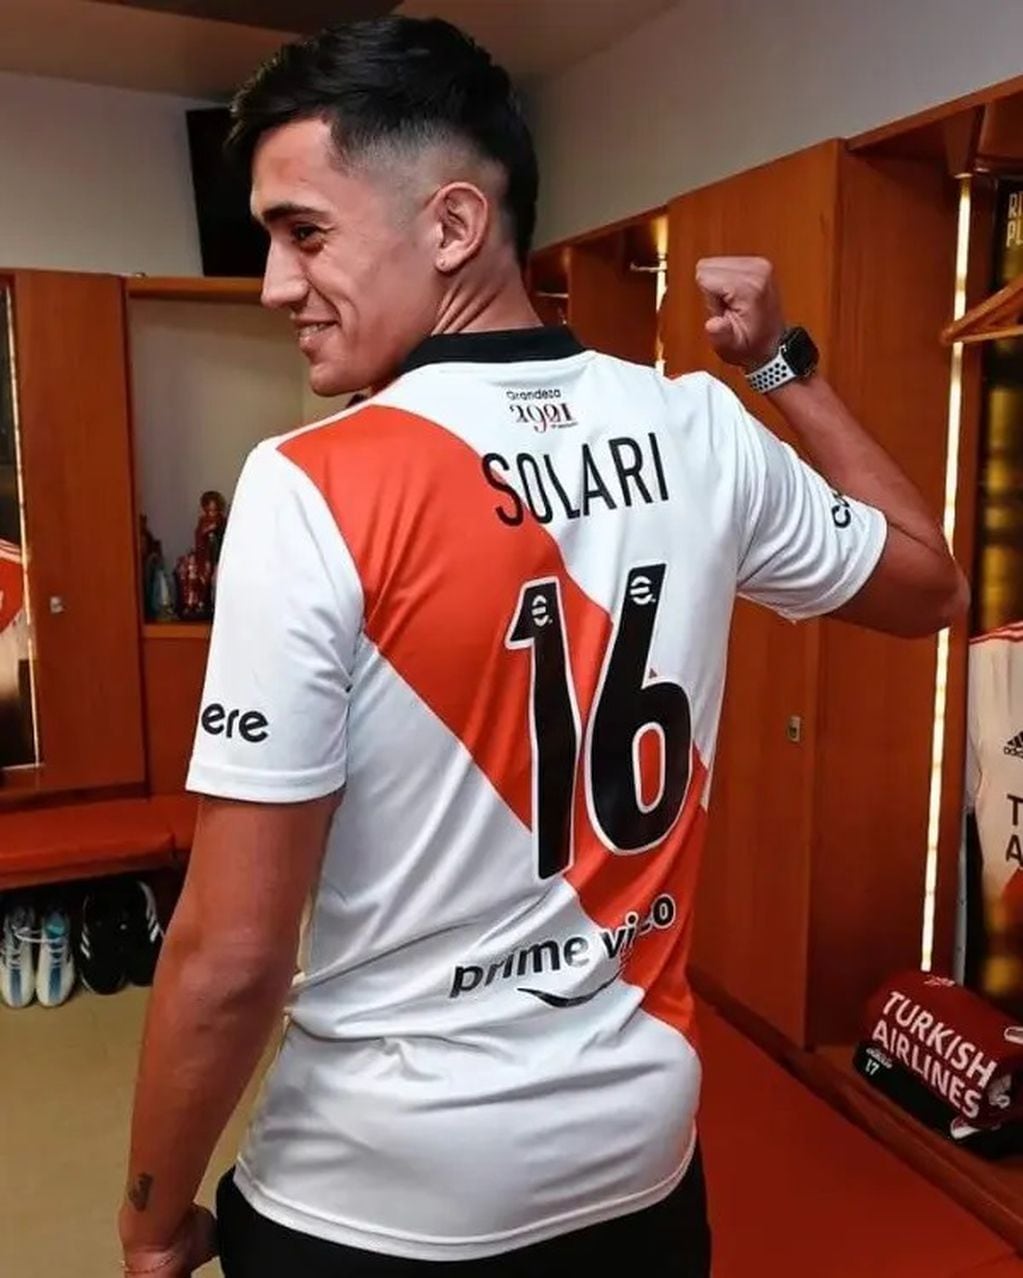 Número de camiseta de Pablo Solari